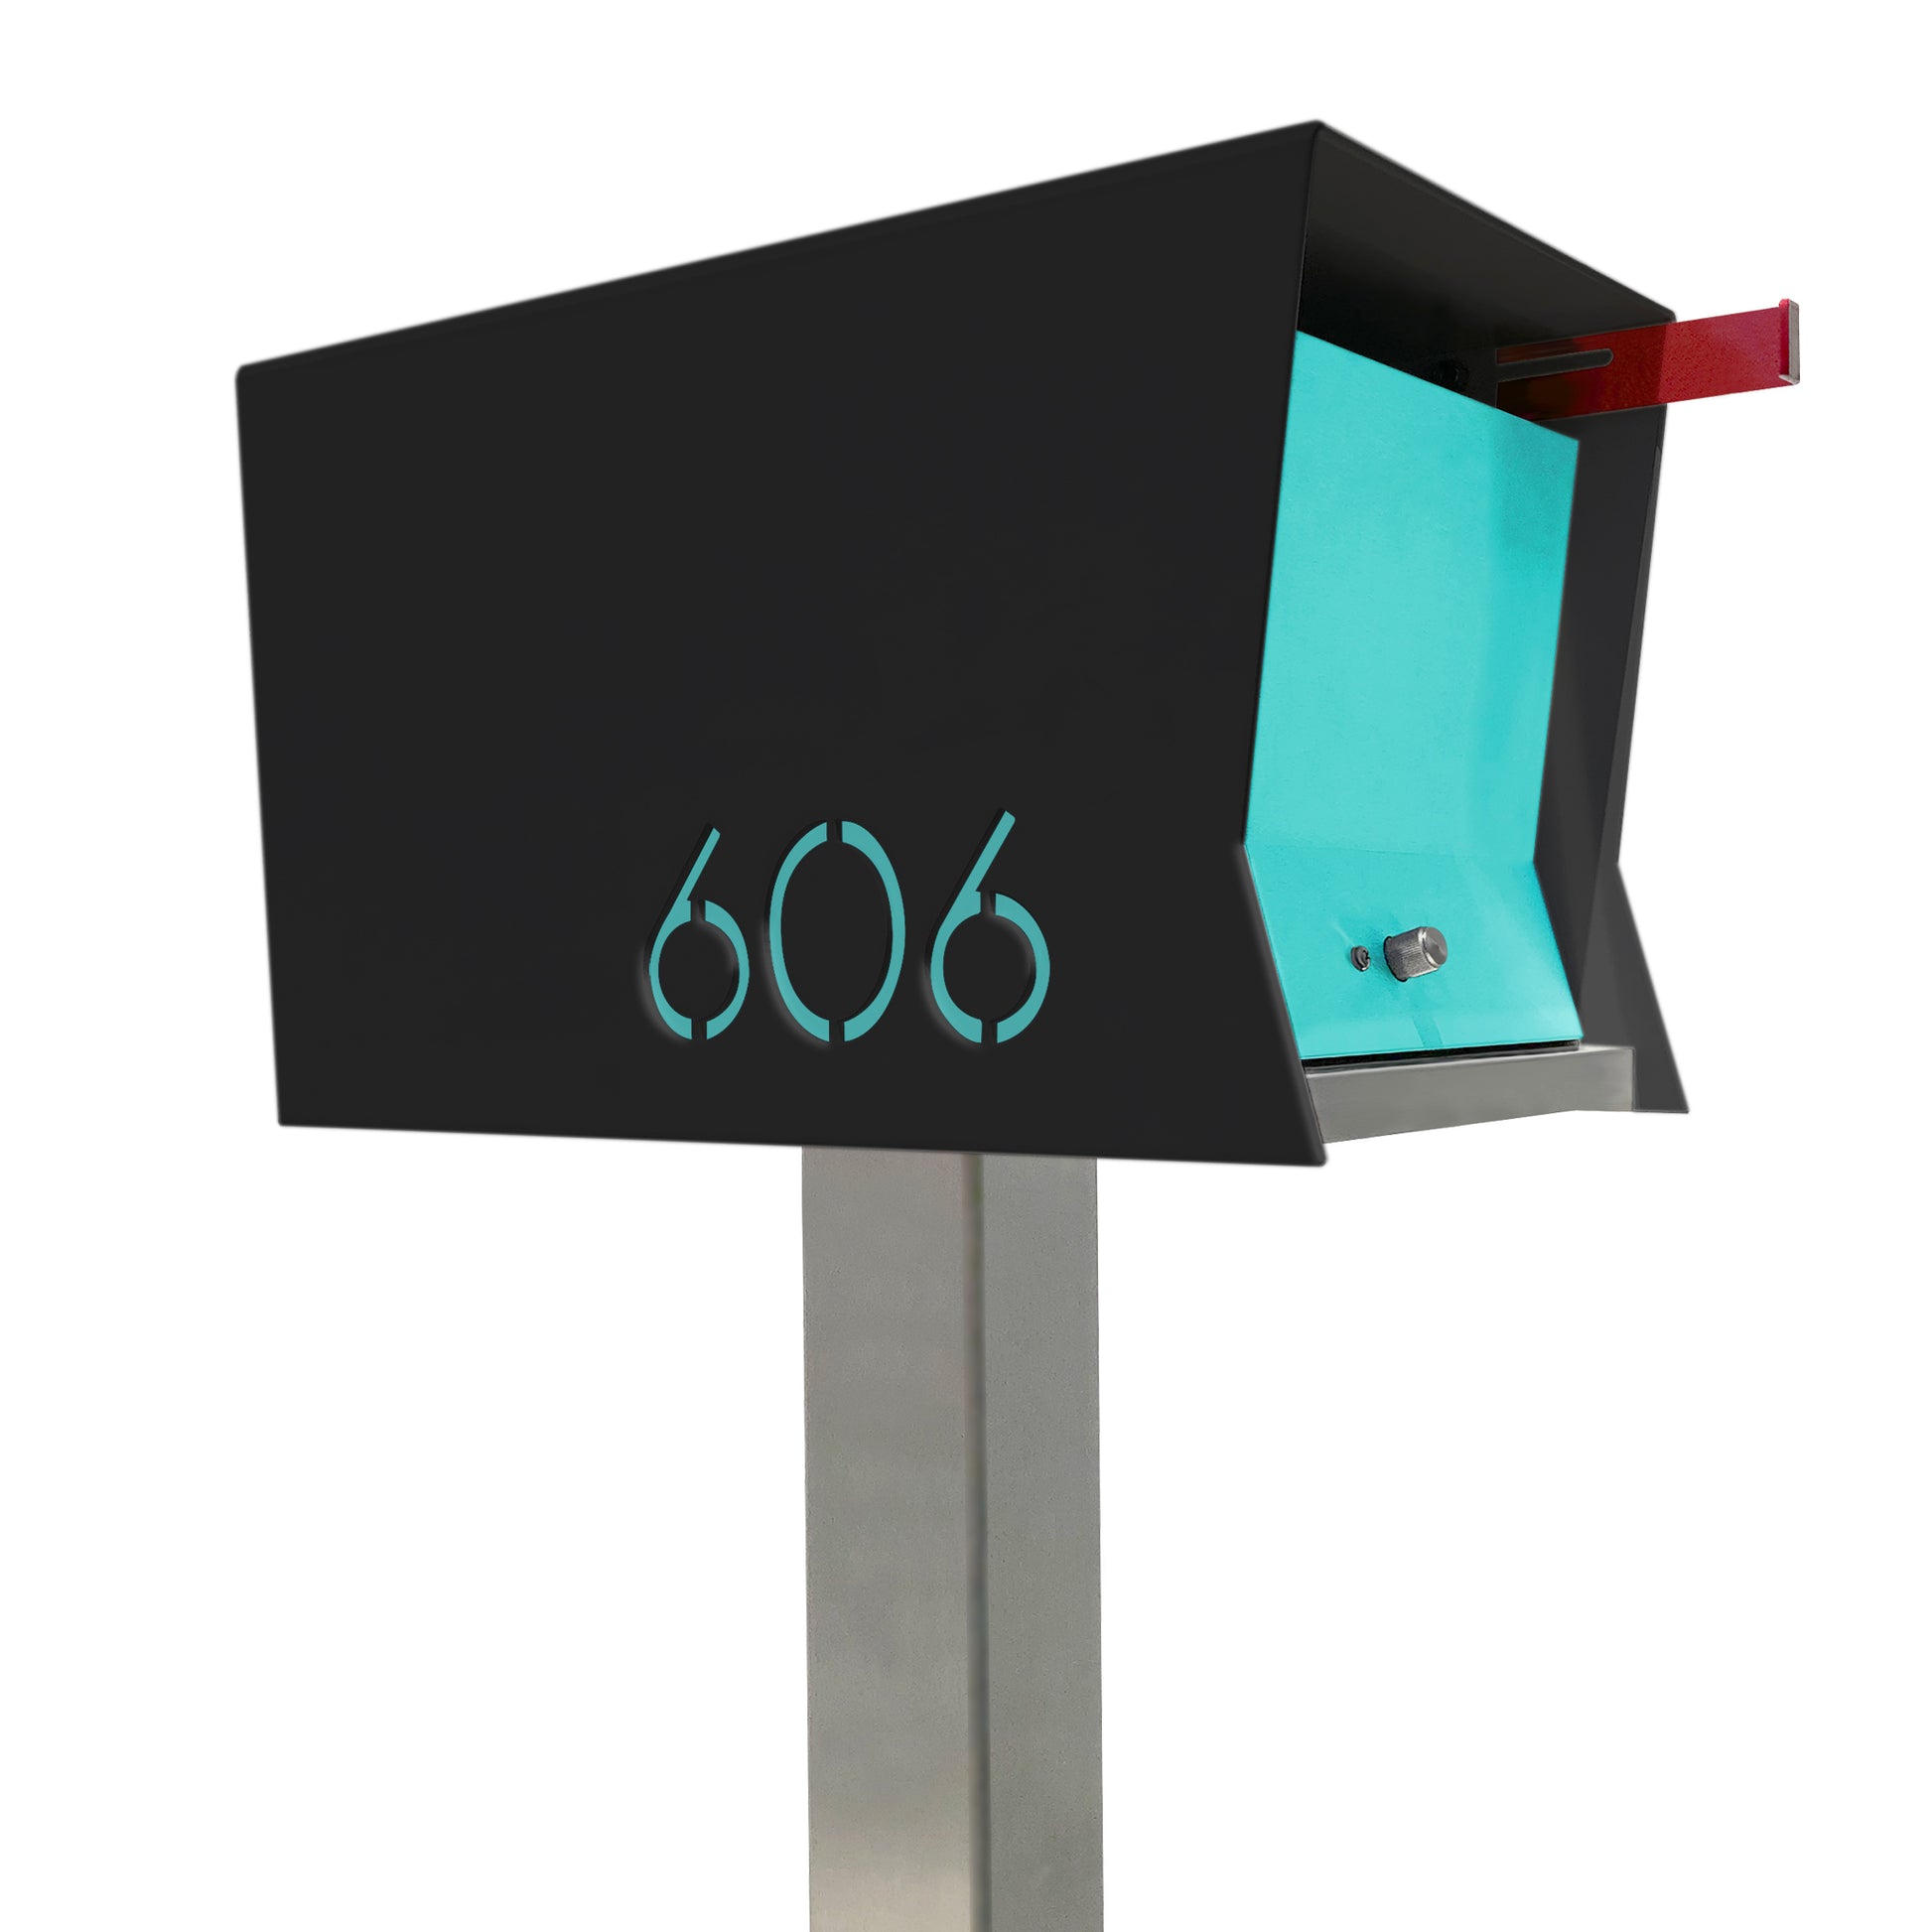 The Original Retrobox in JET BLACK - Modern Mailbox black and blue